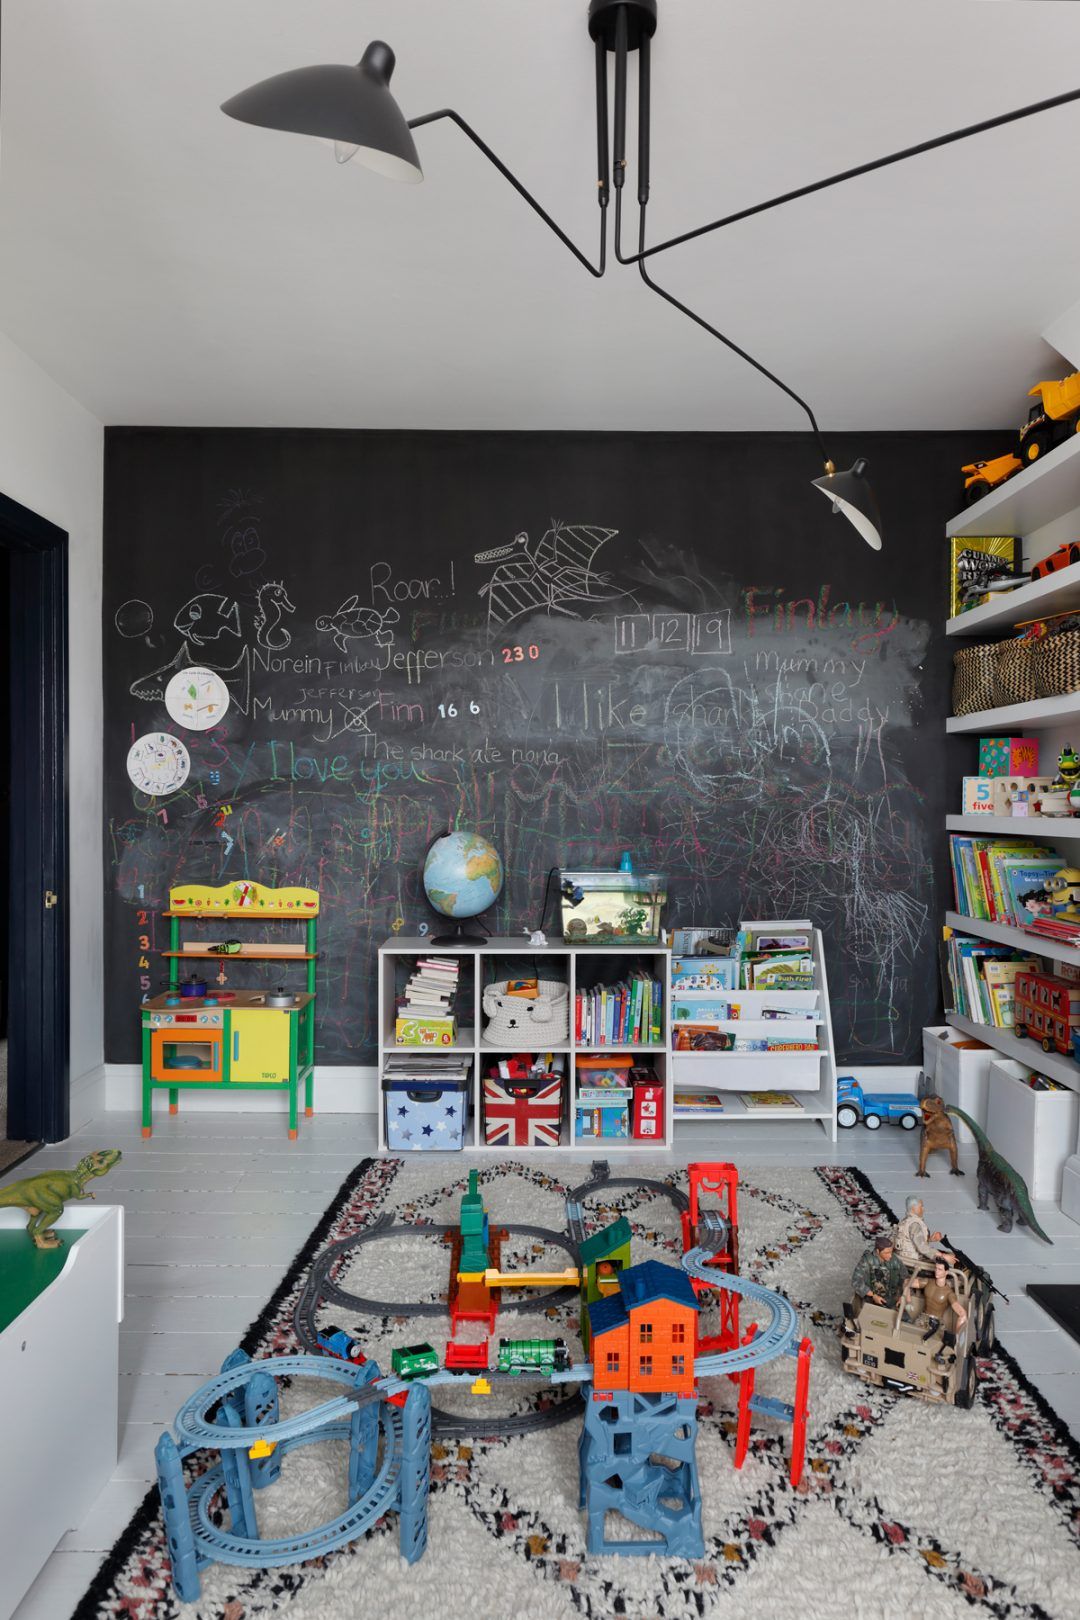 Playroom ideas – 25 fun yet stylish designs kids will love